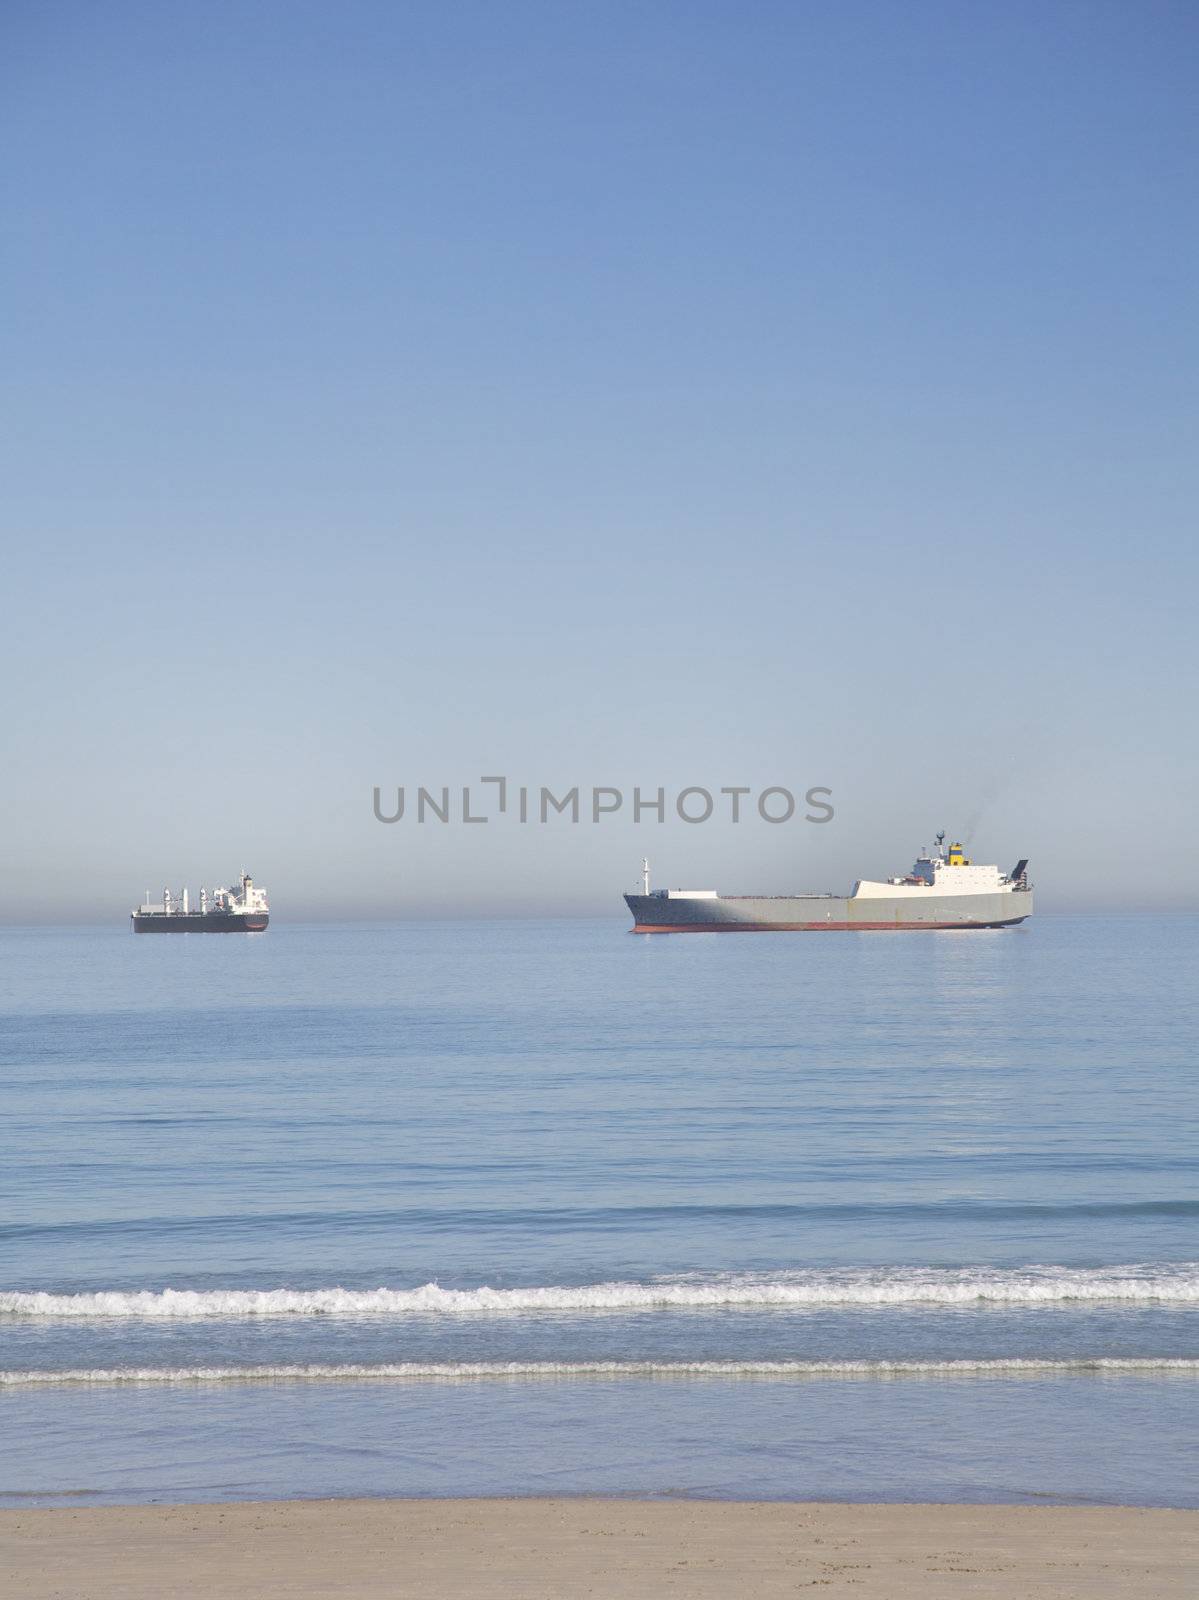 Shipping boats at sea near the beach